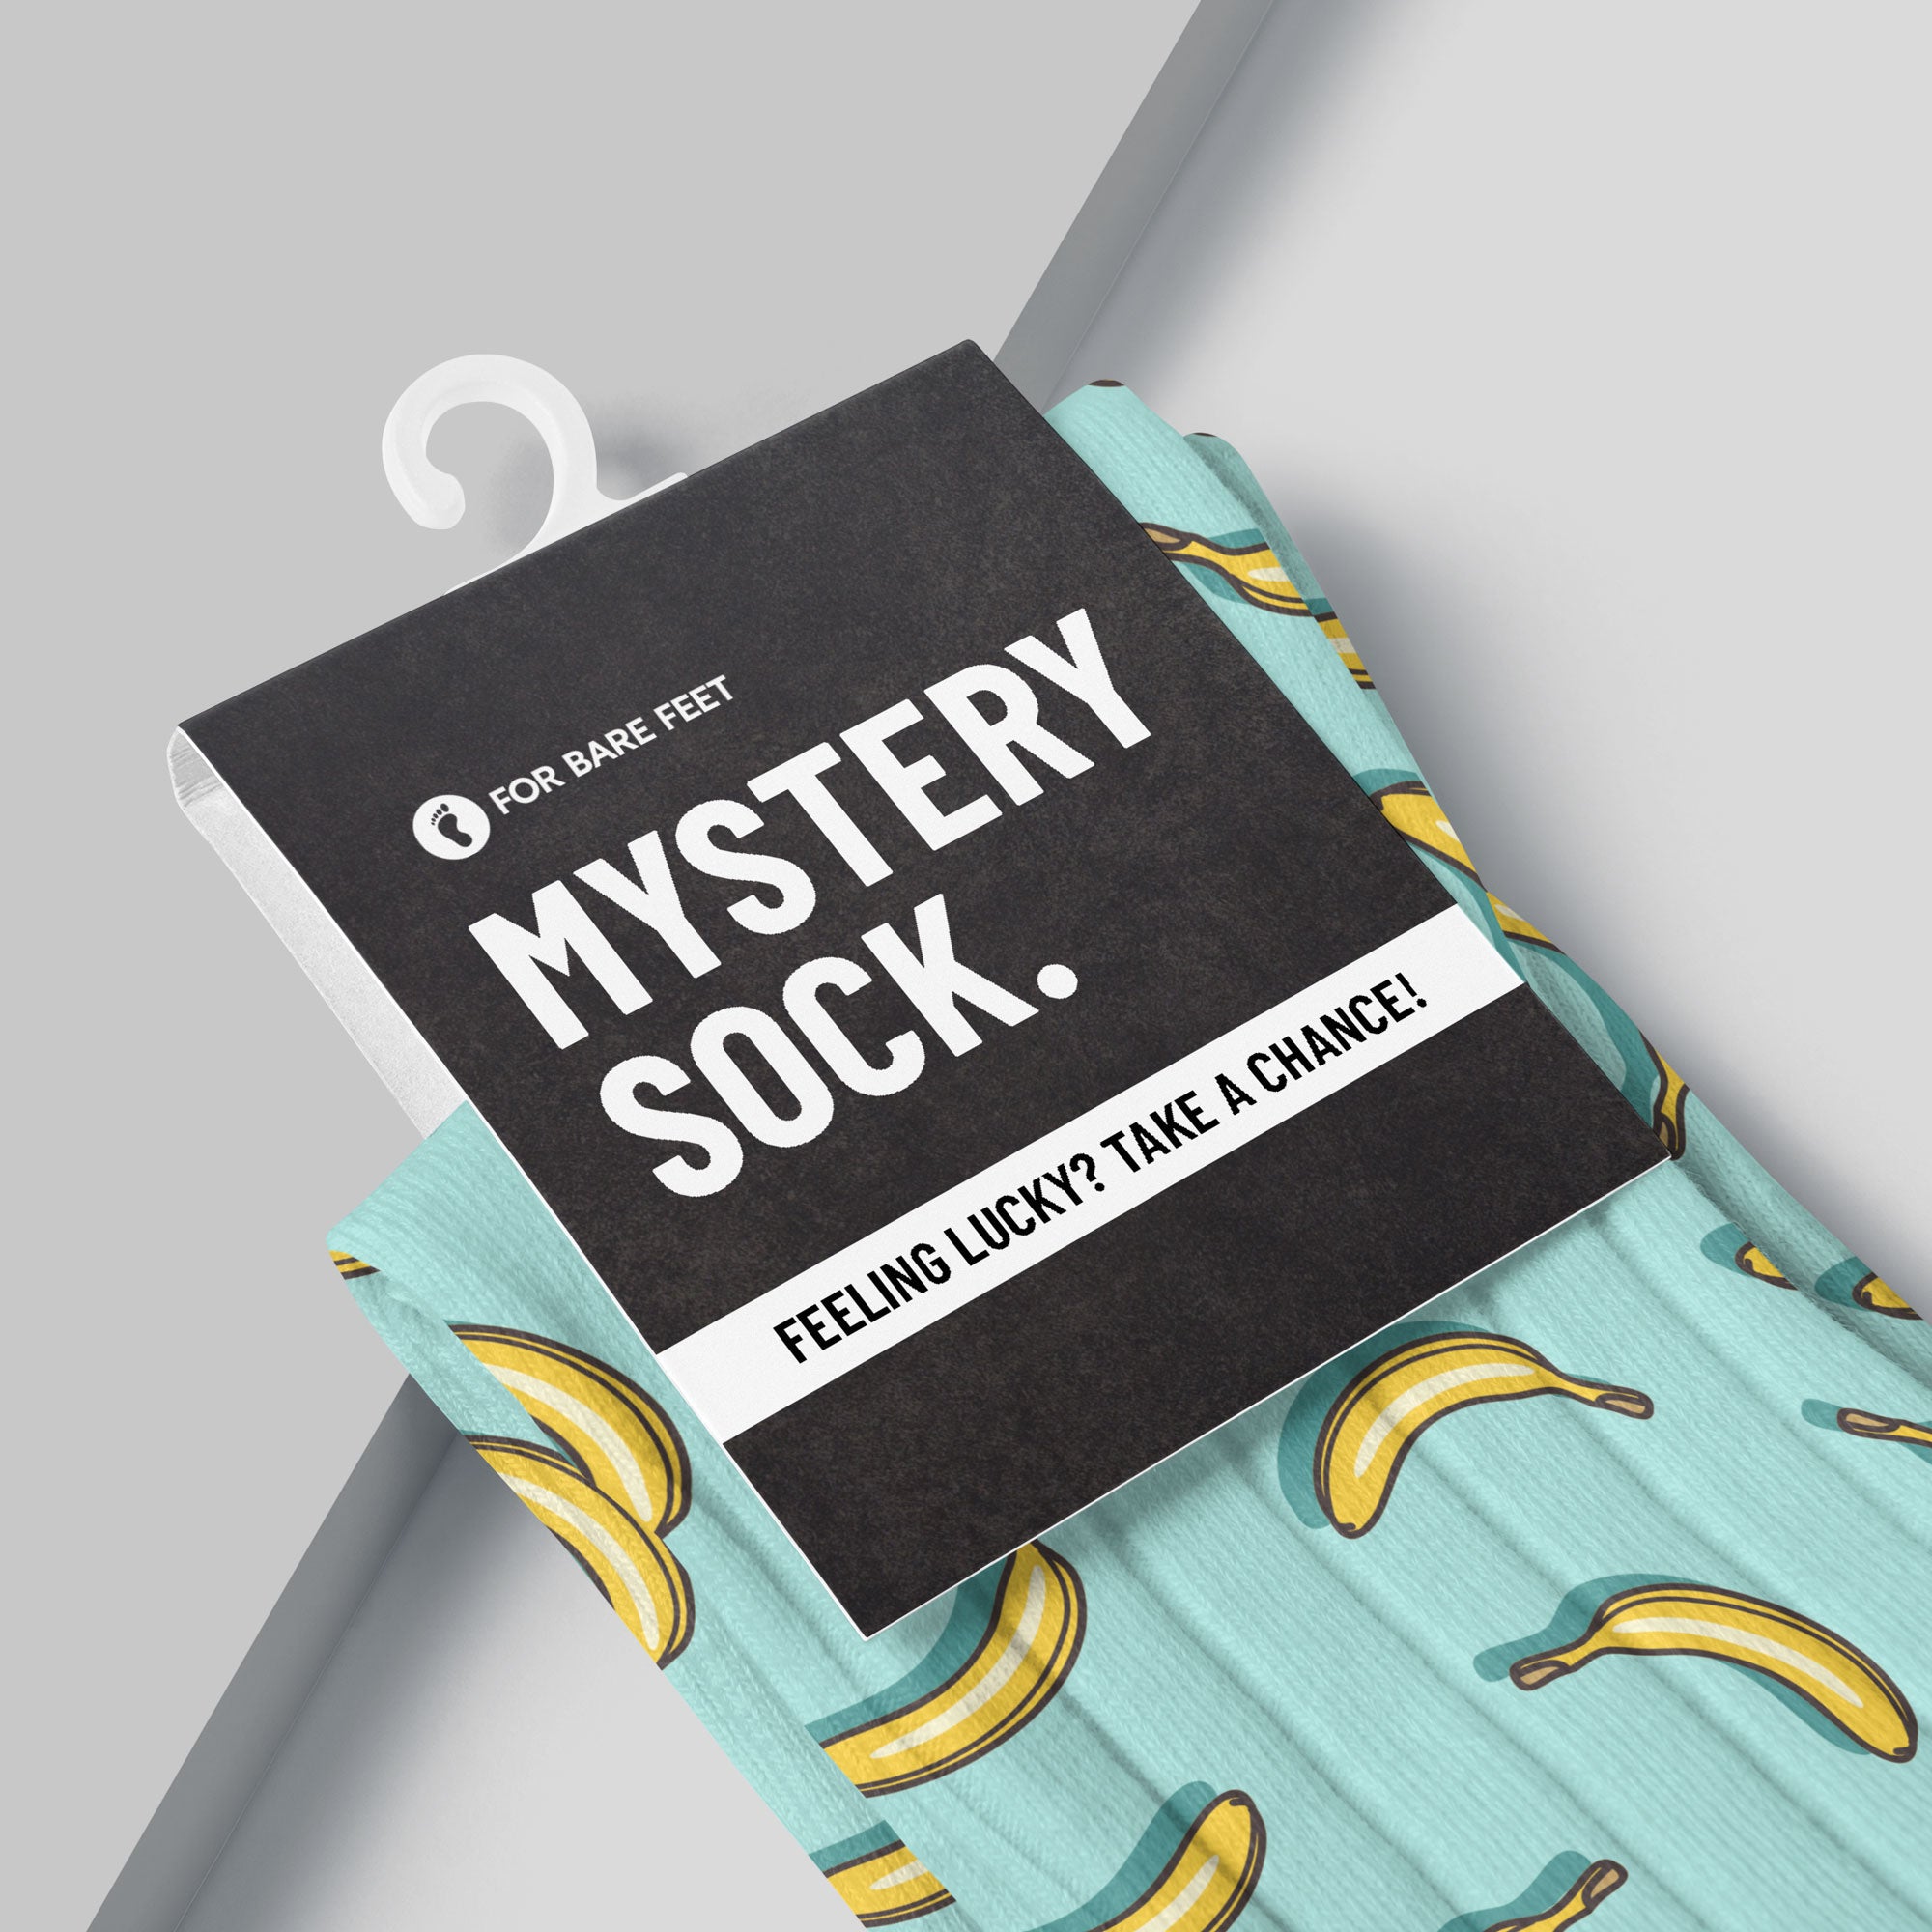 Mystery Sock